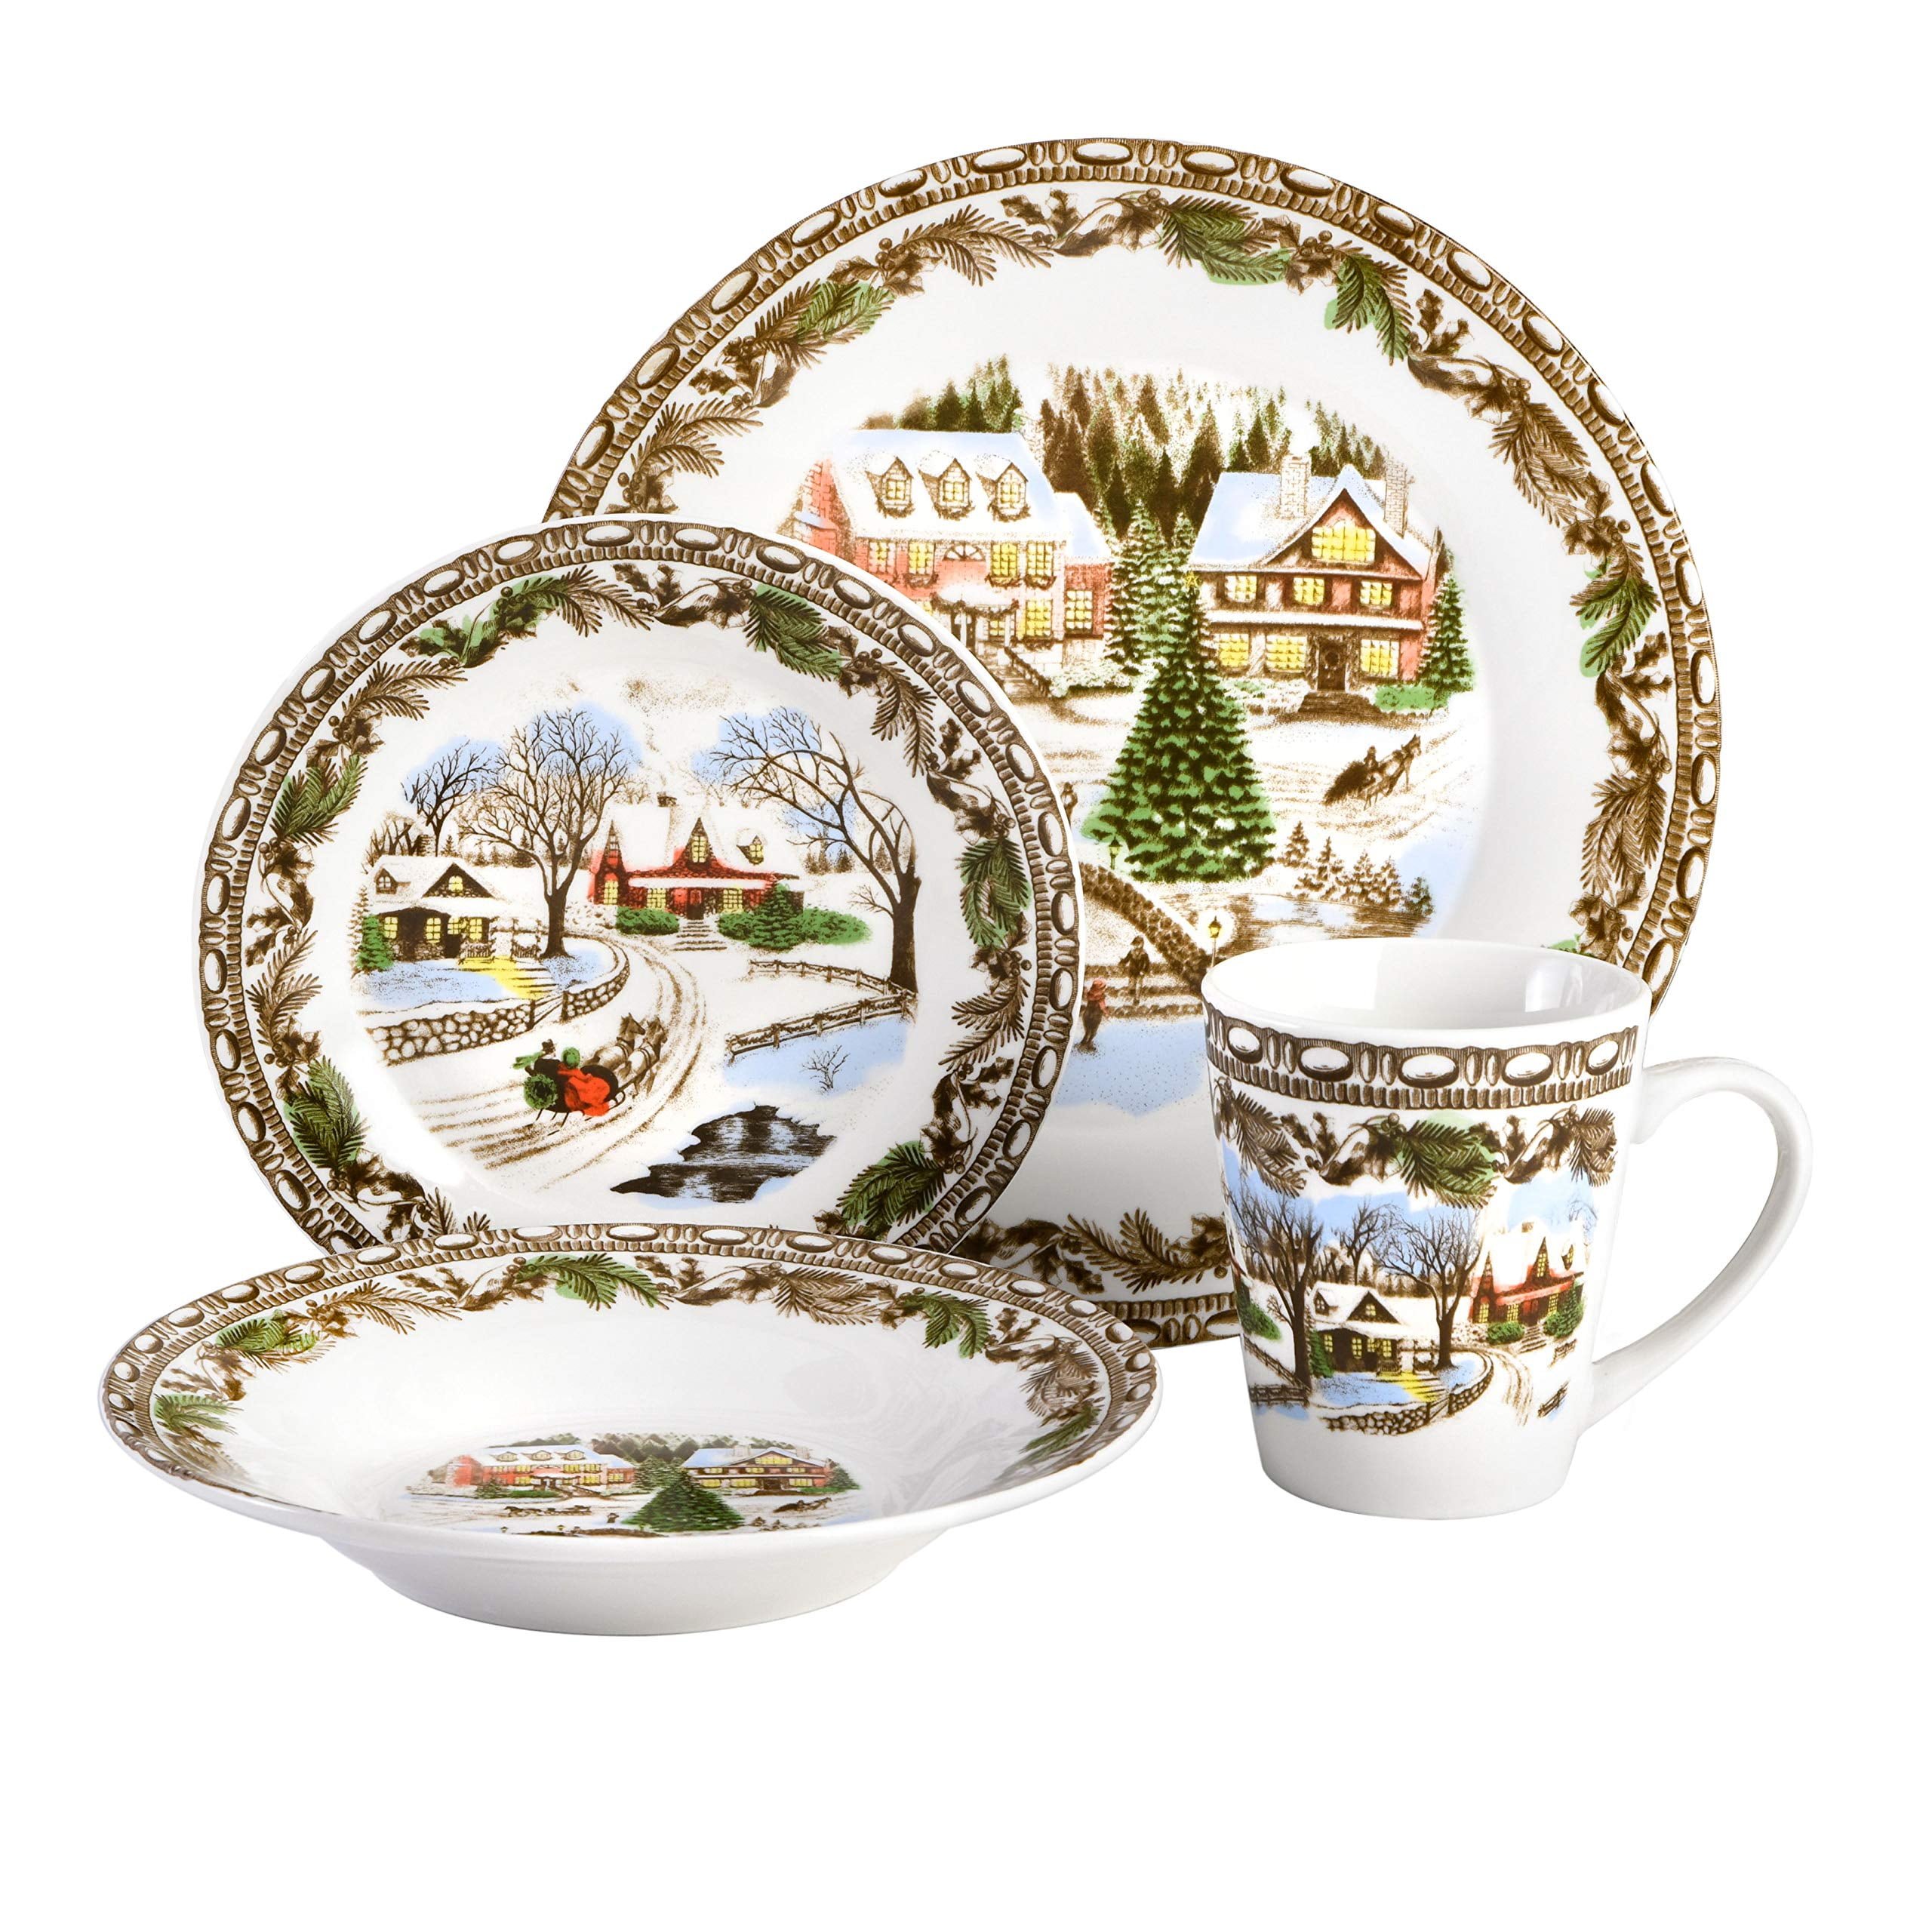 Vintage Lefton Christmas Tree Plates, Set of 6, Retro Holiday Tableware,  Festive Dinnerware, Holiday Decor, Retro Kitchenware 